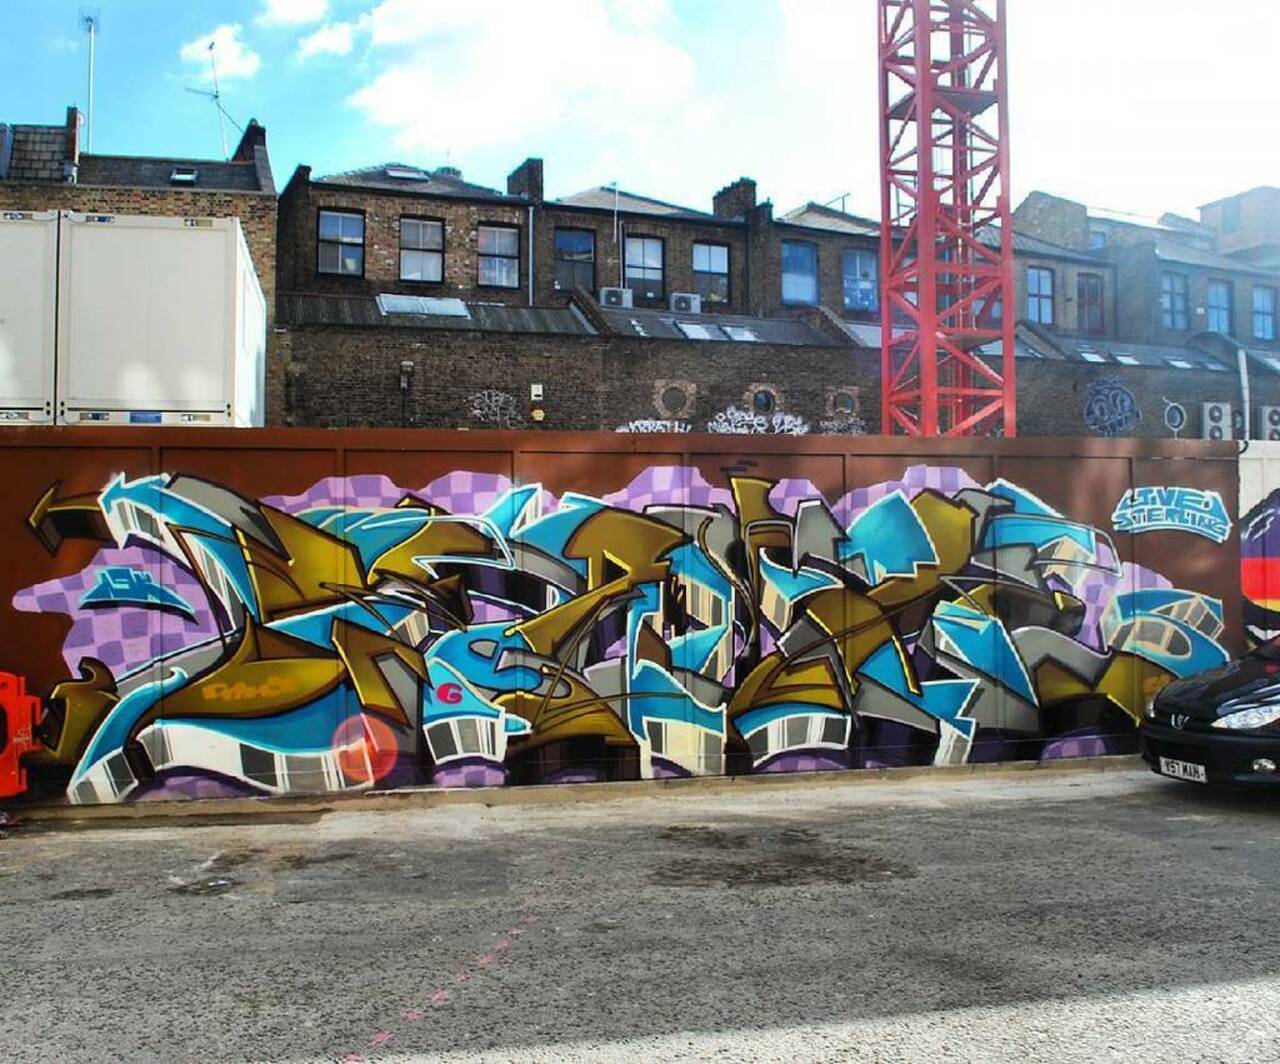 Graffiti art  
#Graffiti #StreetArt #UrbanArt #WhoDidThis #WillowStreet #Shoreditch #London #Nikon #NikonD60 #Niko… http://t.co/NFMrCzZb9U